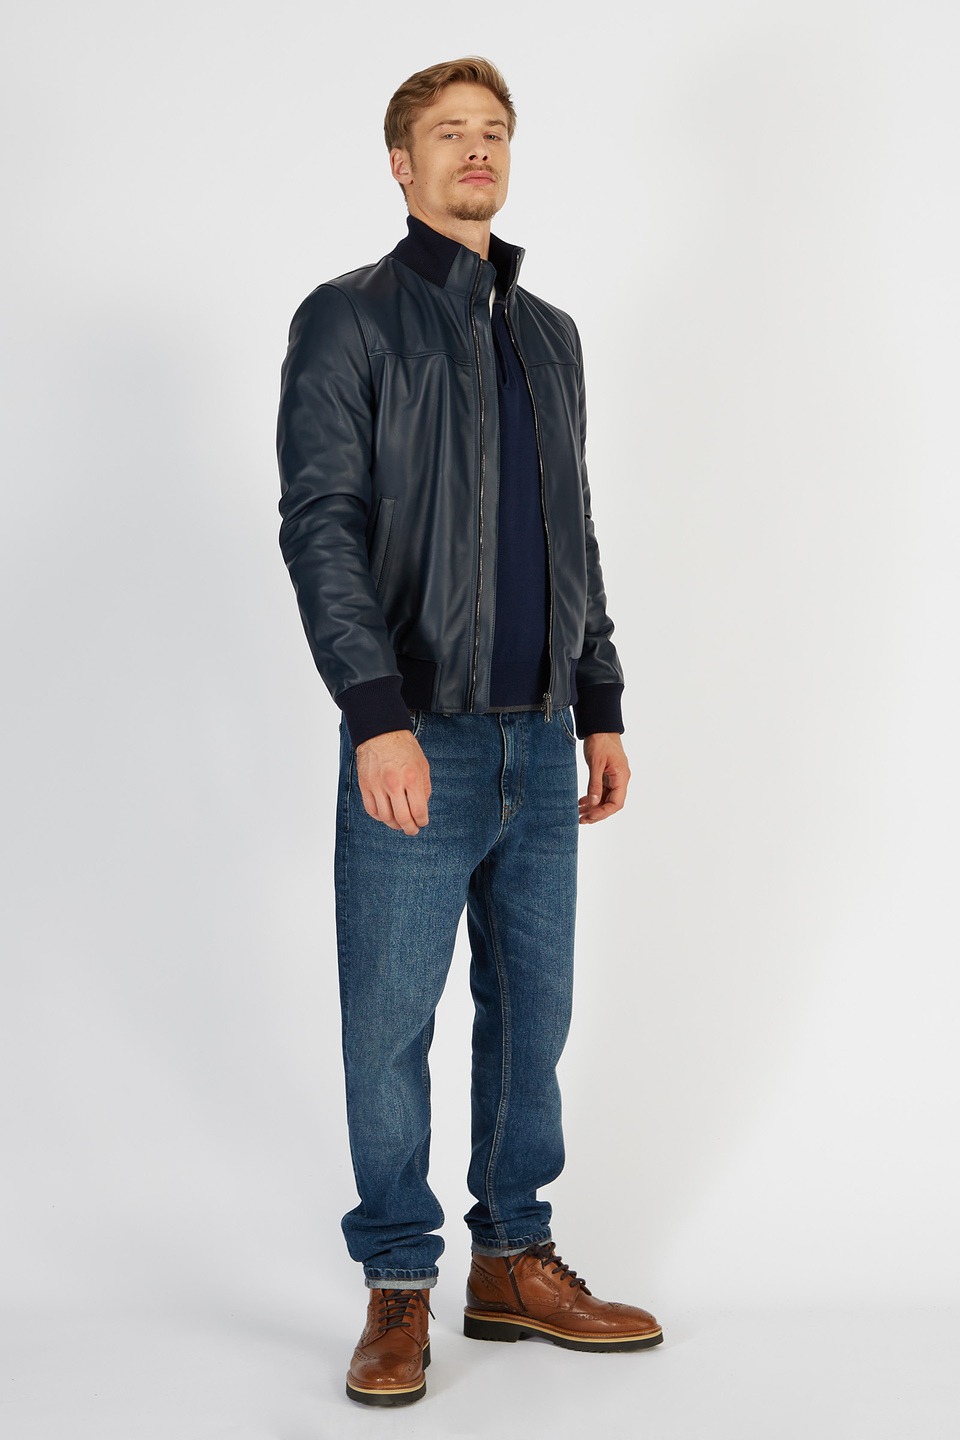 Blue Ribbon leather jacket with regular fit zip front closure | La Martina - Official Online Shop